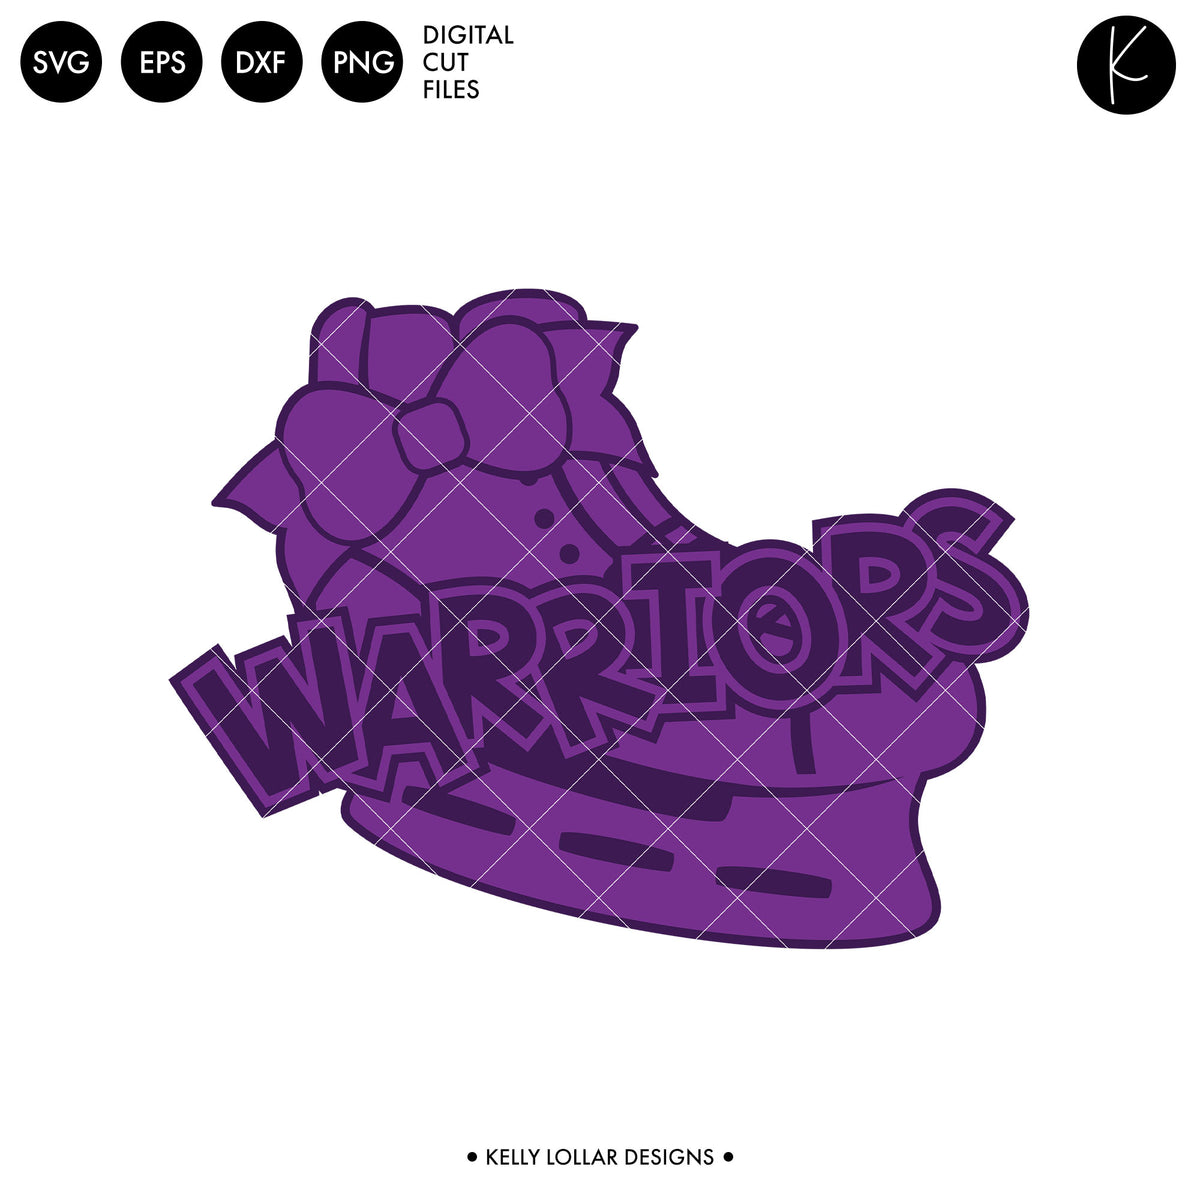 Warriors Hockey Bundle | SVG DXF EPS PNG Cut Files